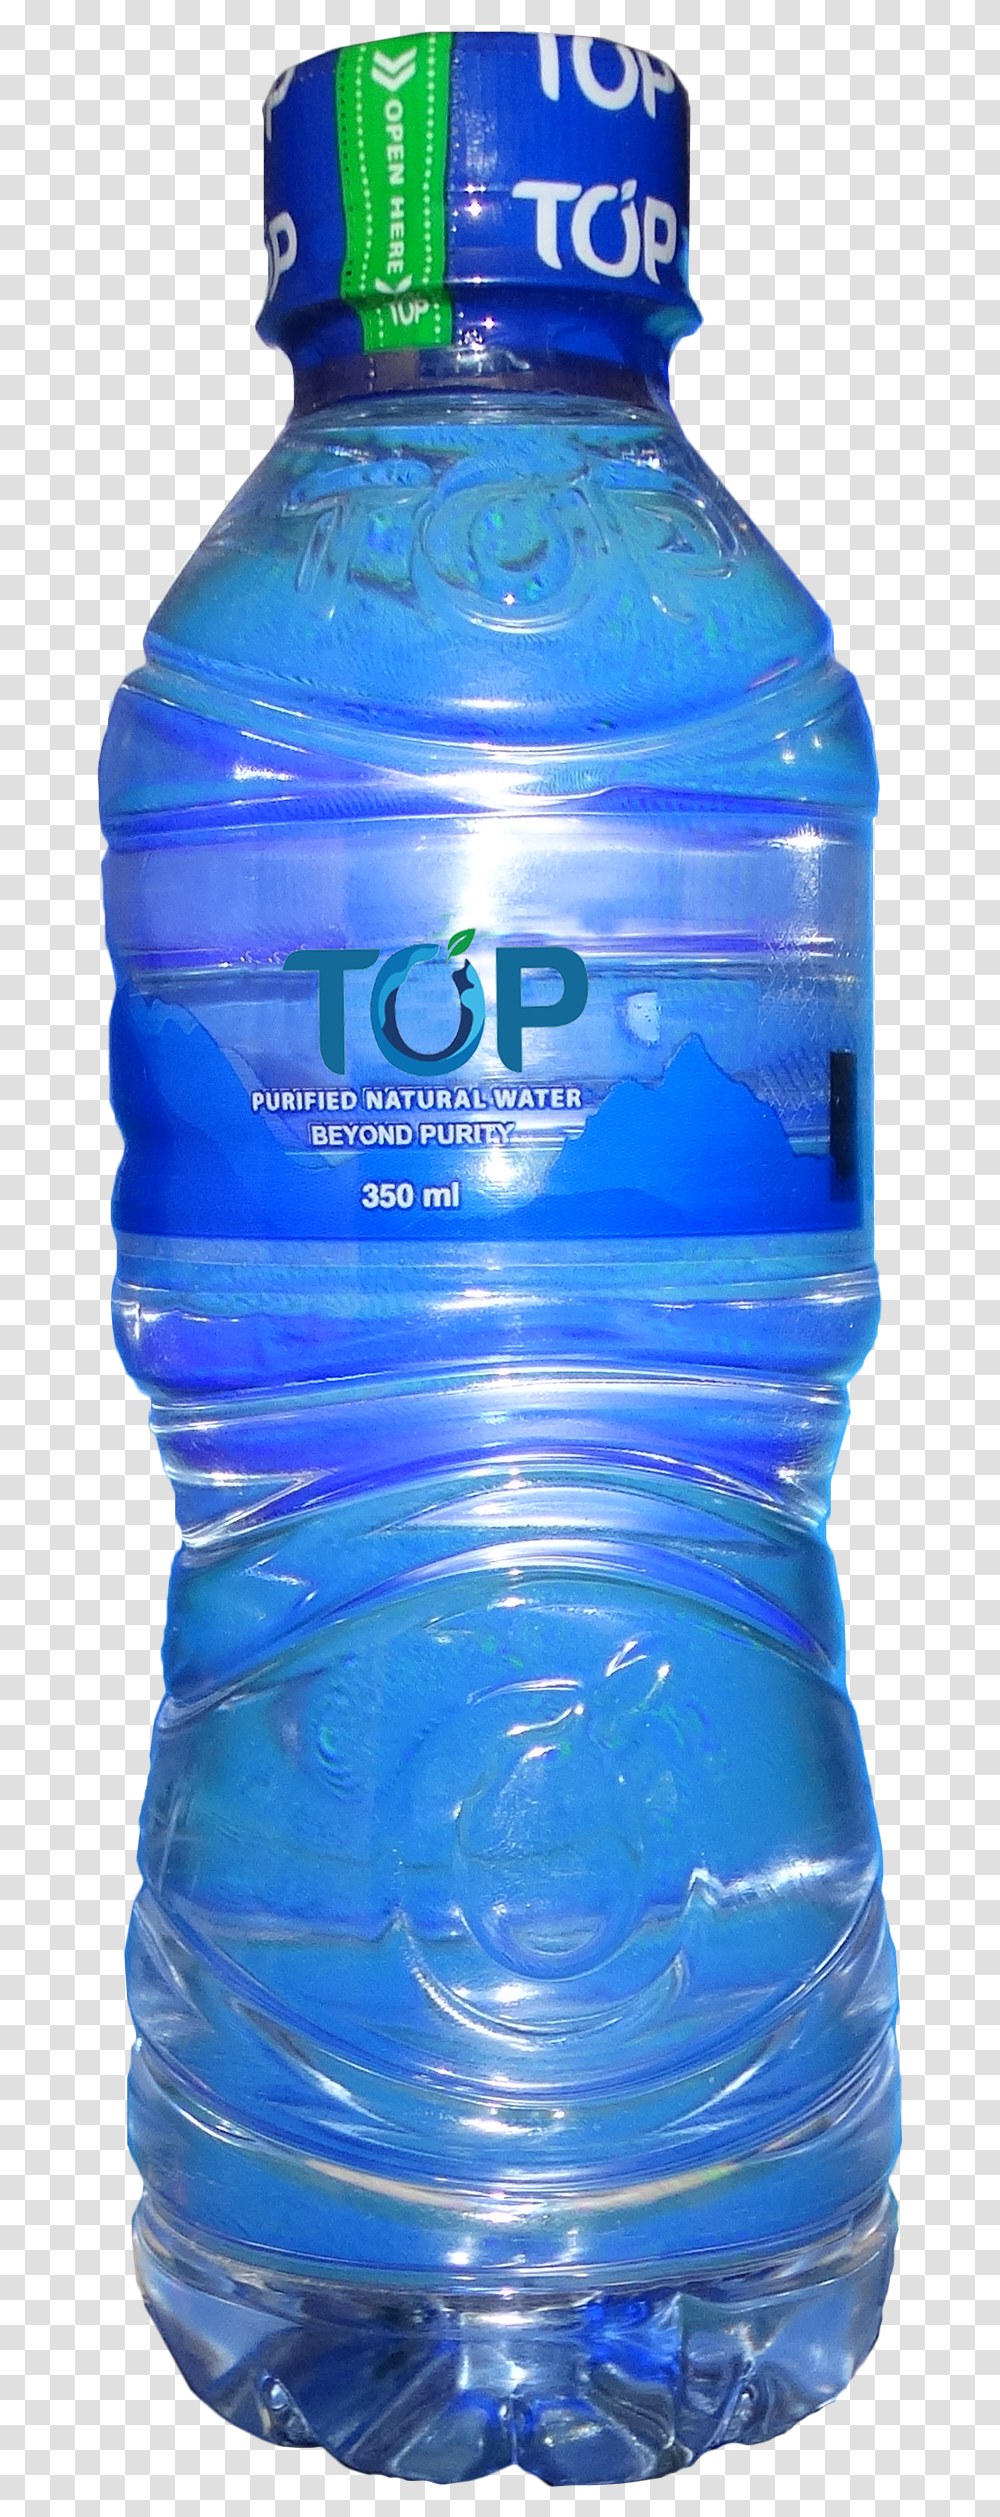 Liter Top Water Ethiopia, Bottle, Mineral Water, Beverage, Water Bottle Transparent Png